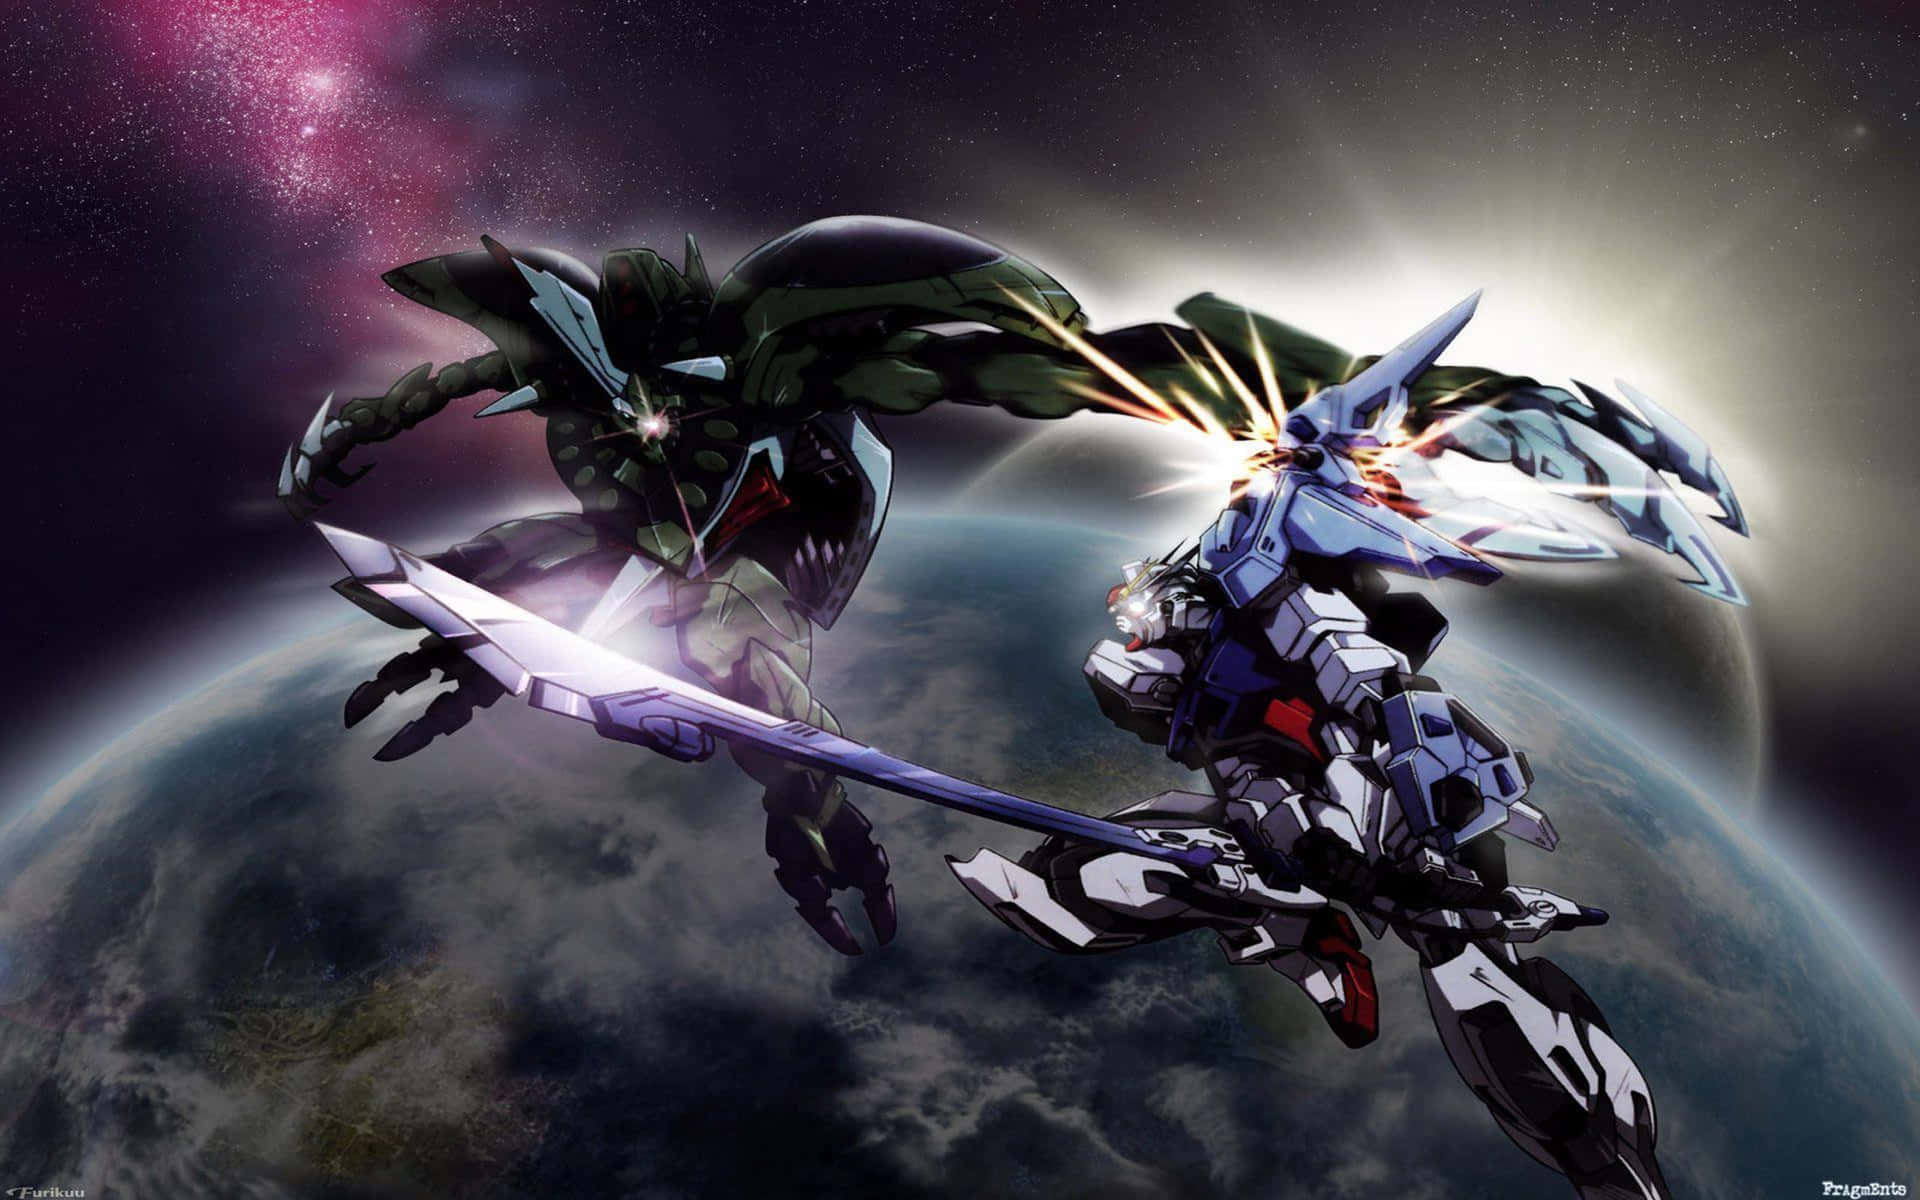 Featuring the intense action of Gundam 4K Wallpaper